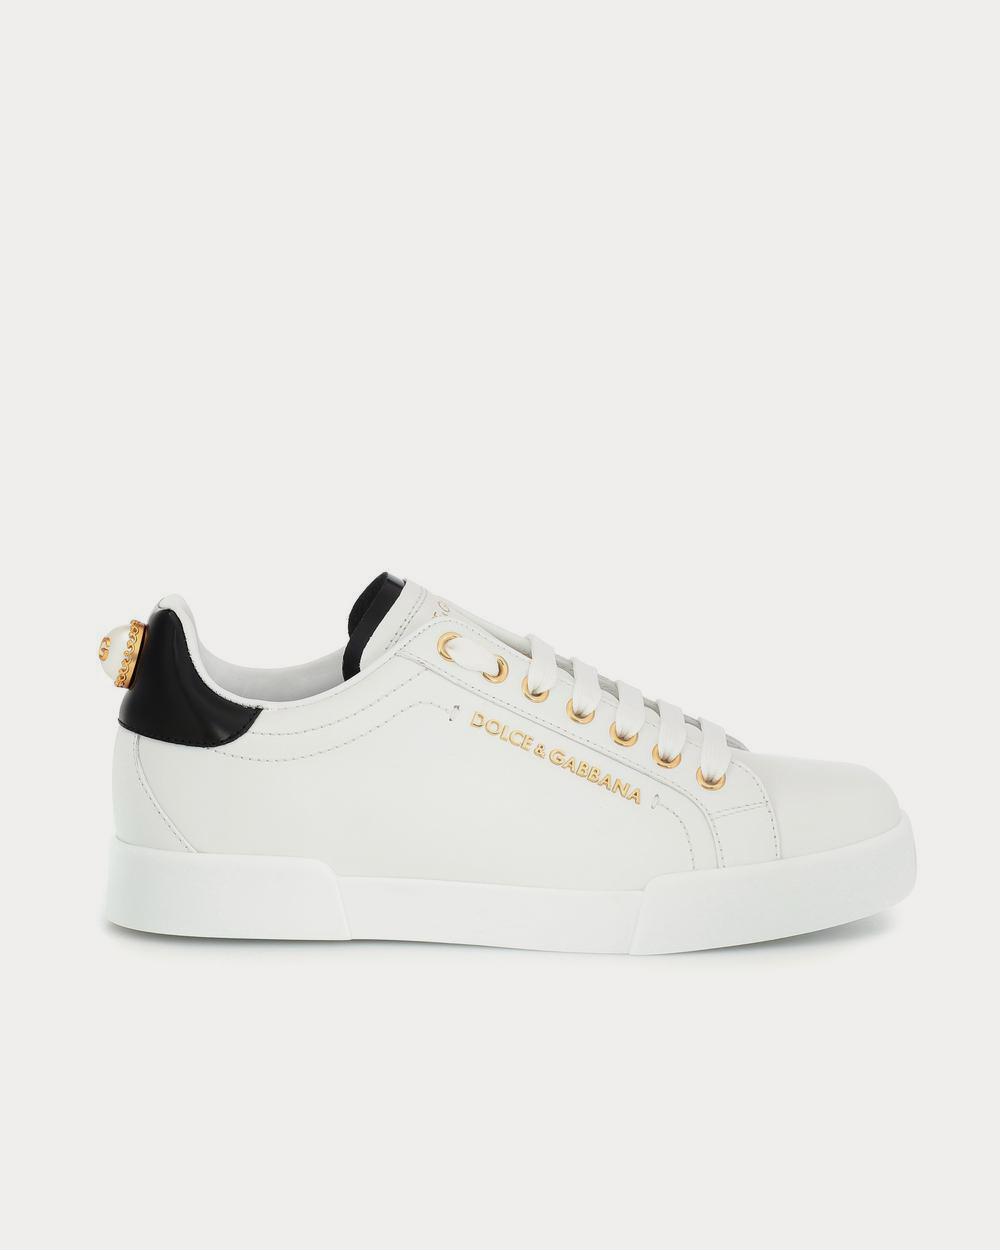 Dolce & Gabbana Portofino leather white gold Low Top Sneakers - Sneak ...